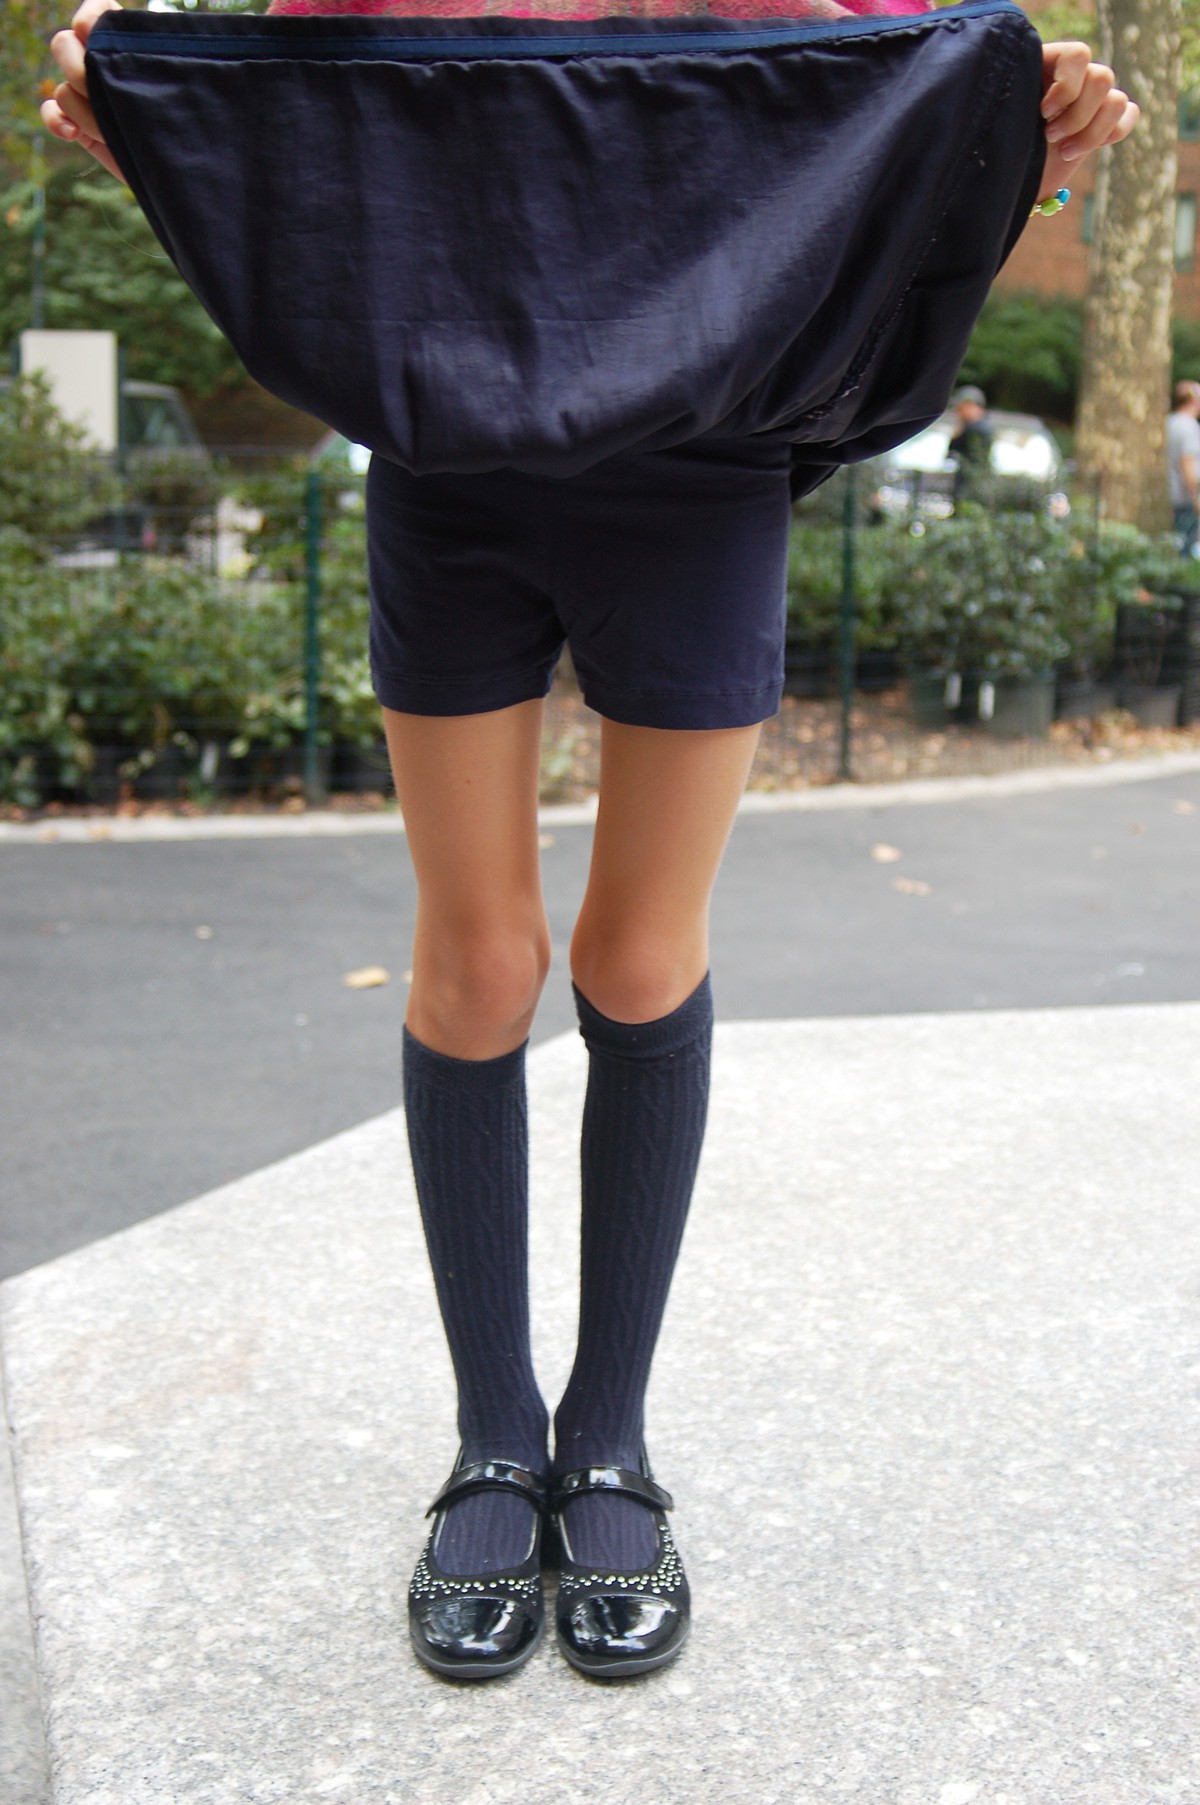 Shorts under a skirt - Road Warriorette